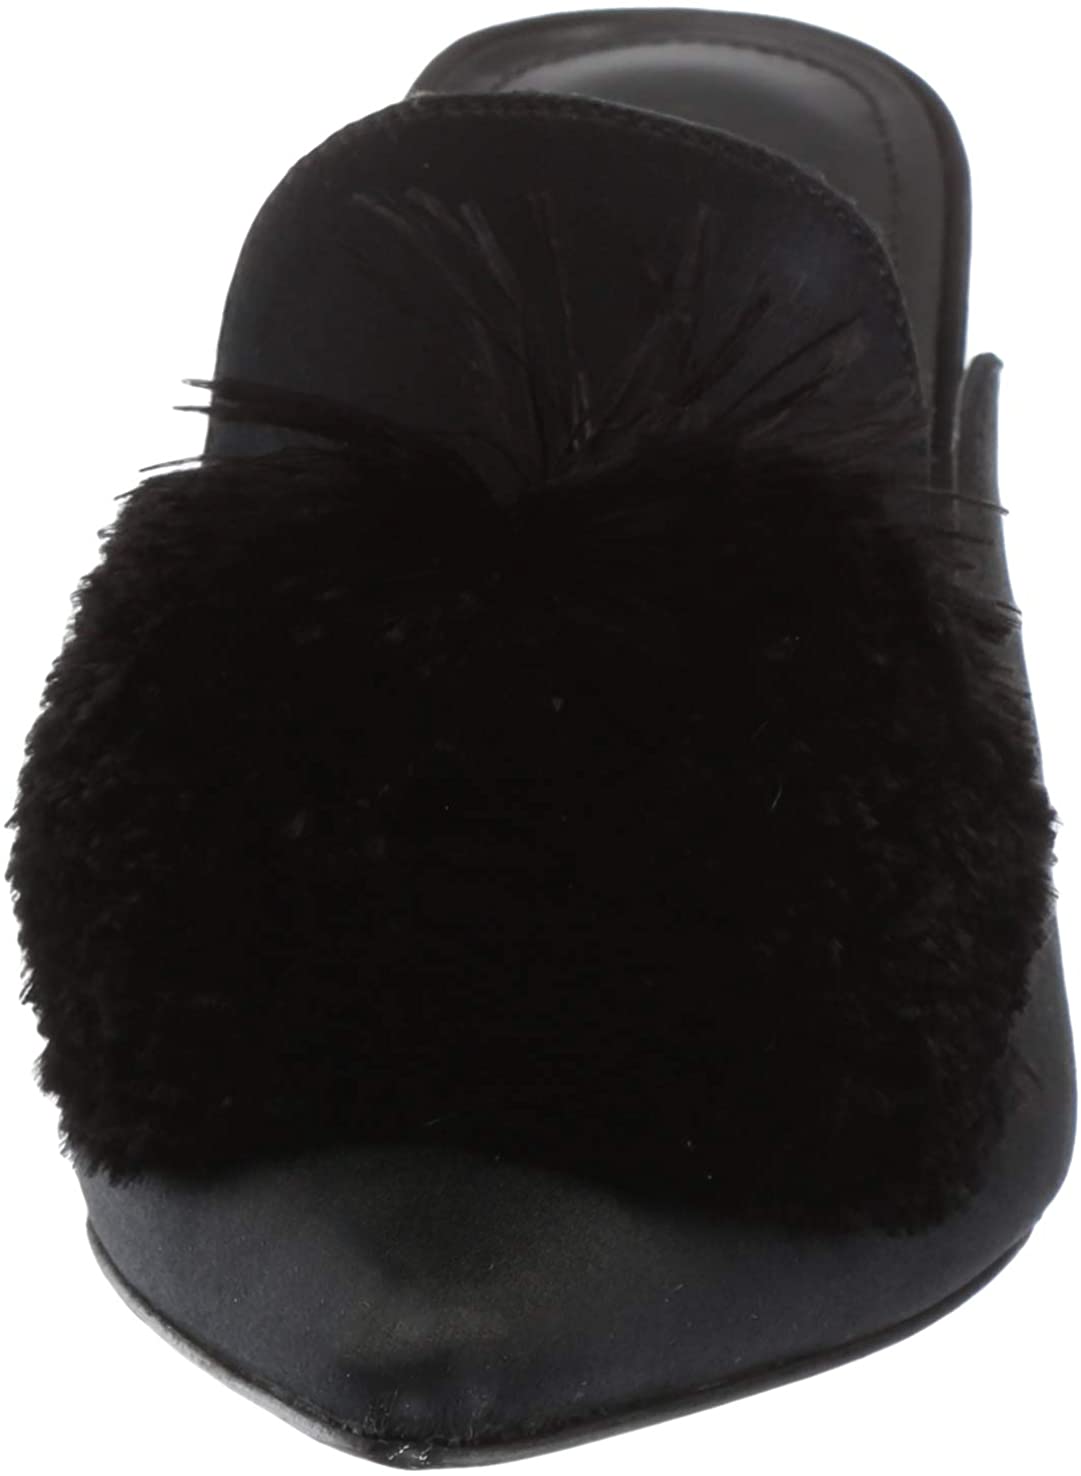 Charles David Adelle Women/Adult shoe size 7  Casual 2C18F001-BLACK Black - image 2 of 8